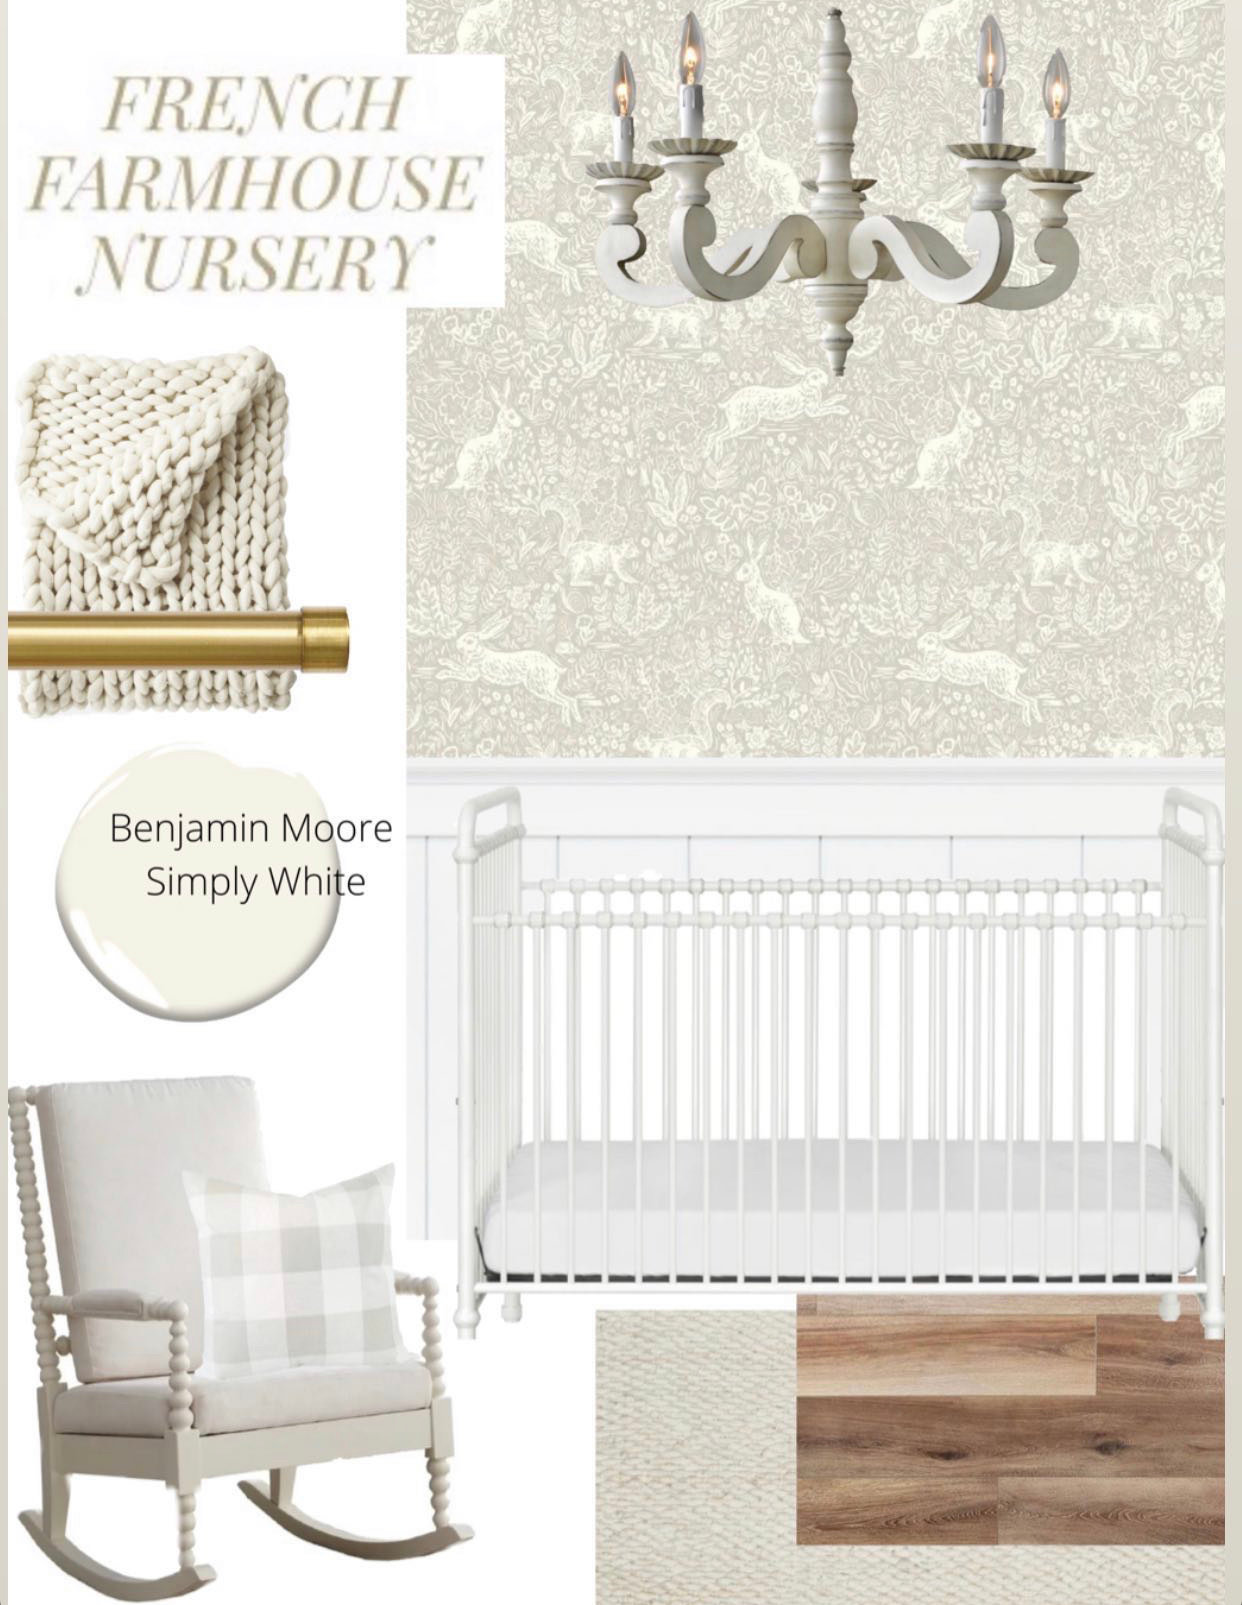 French Farmhouse nursery, French Country chandelier, rabbit wallpaper, white iron crib, warm wood plank flooring, 